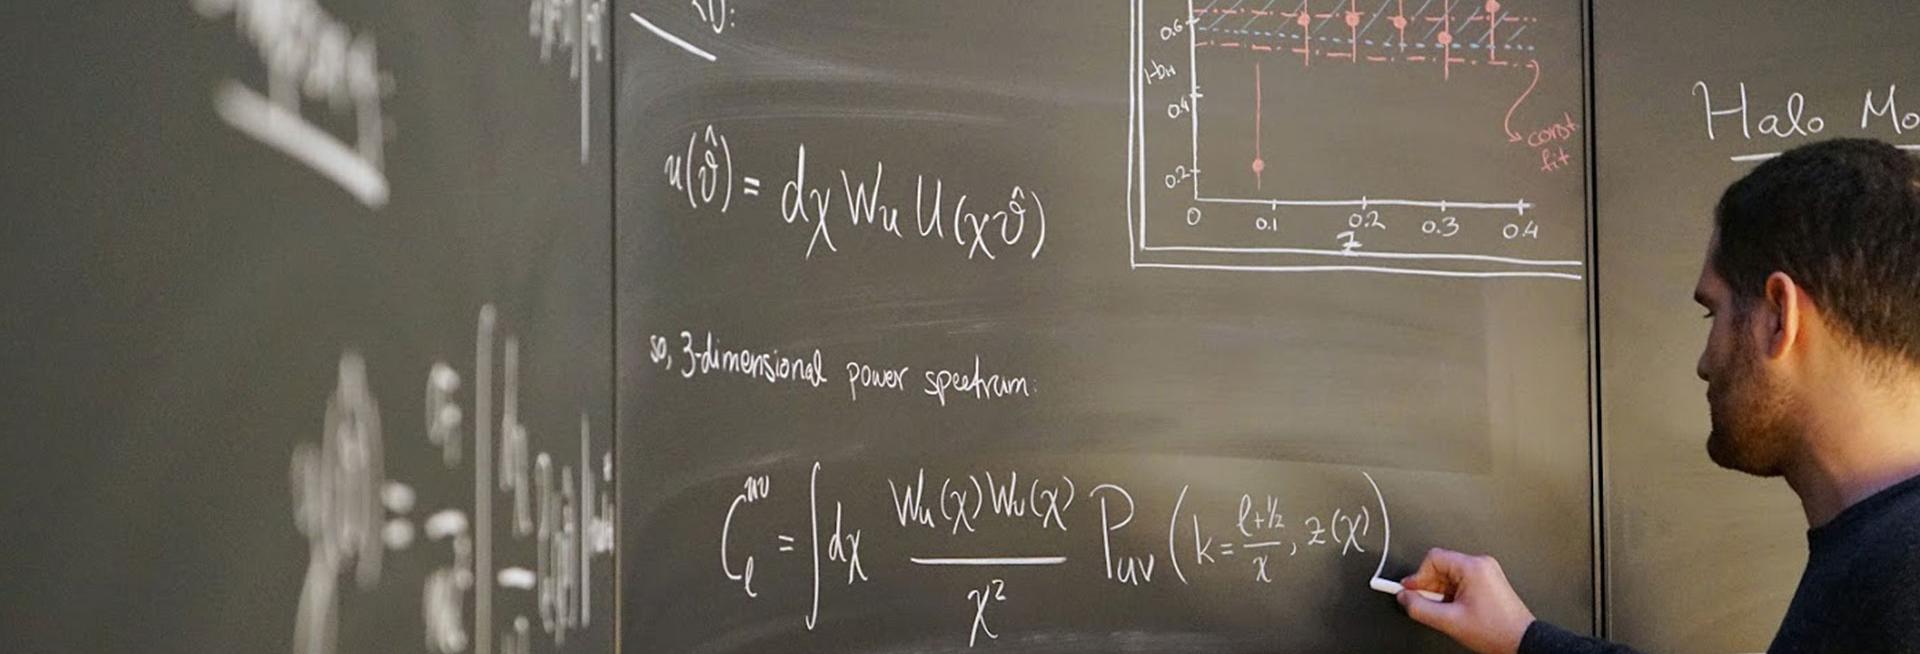 Male student at blackboard exploring an astrophysics problem